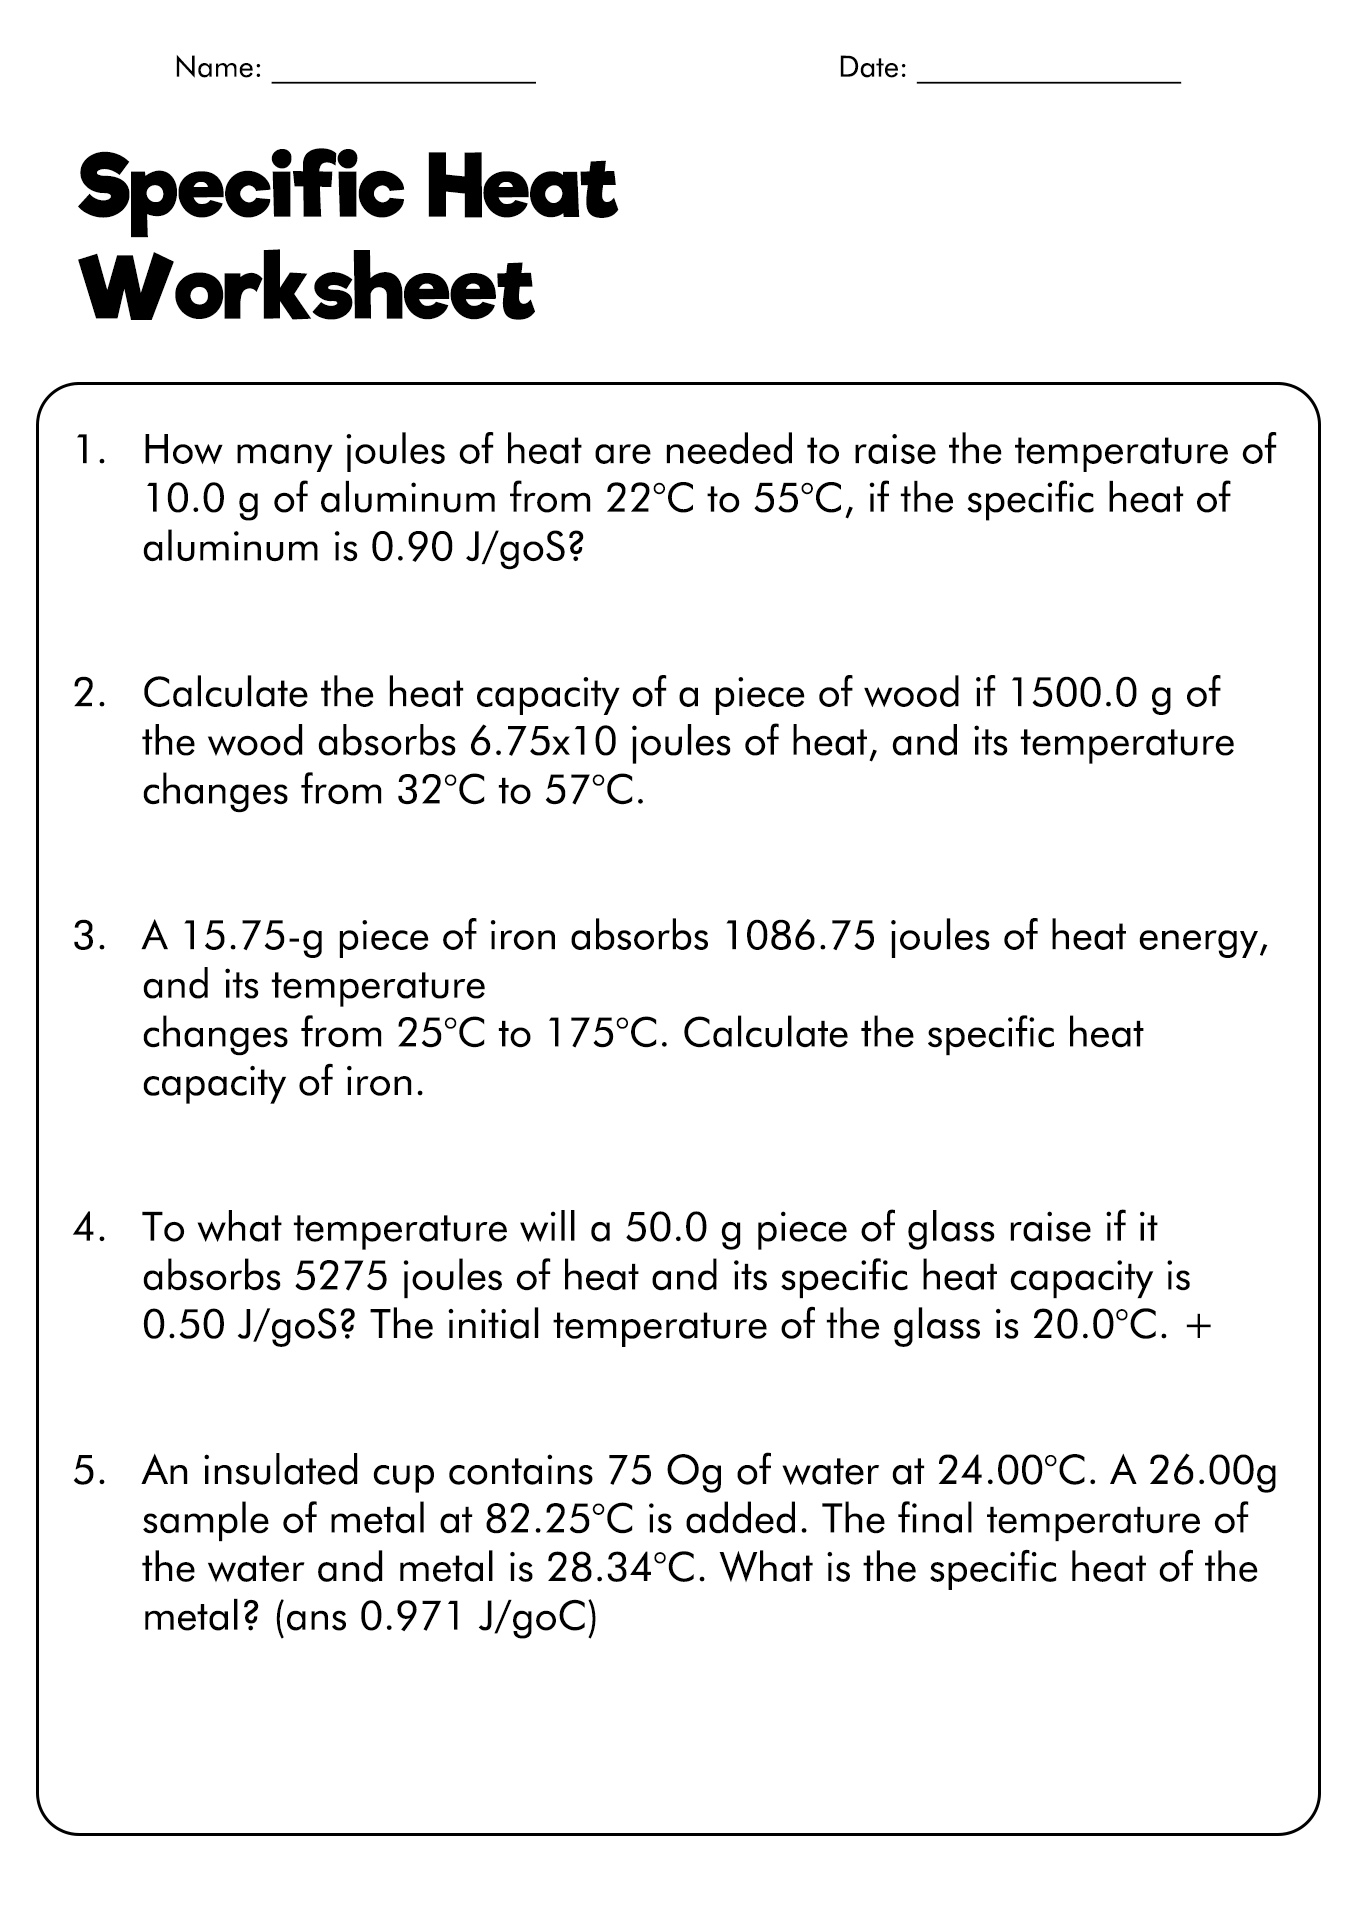 Specific Heat Capacity Worksheet